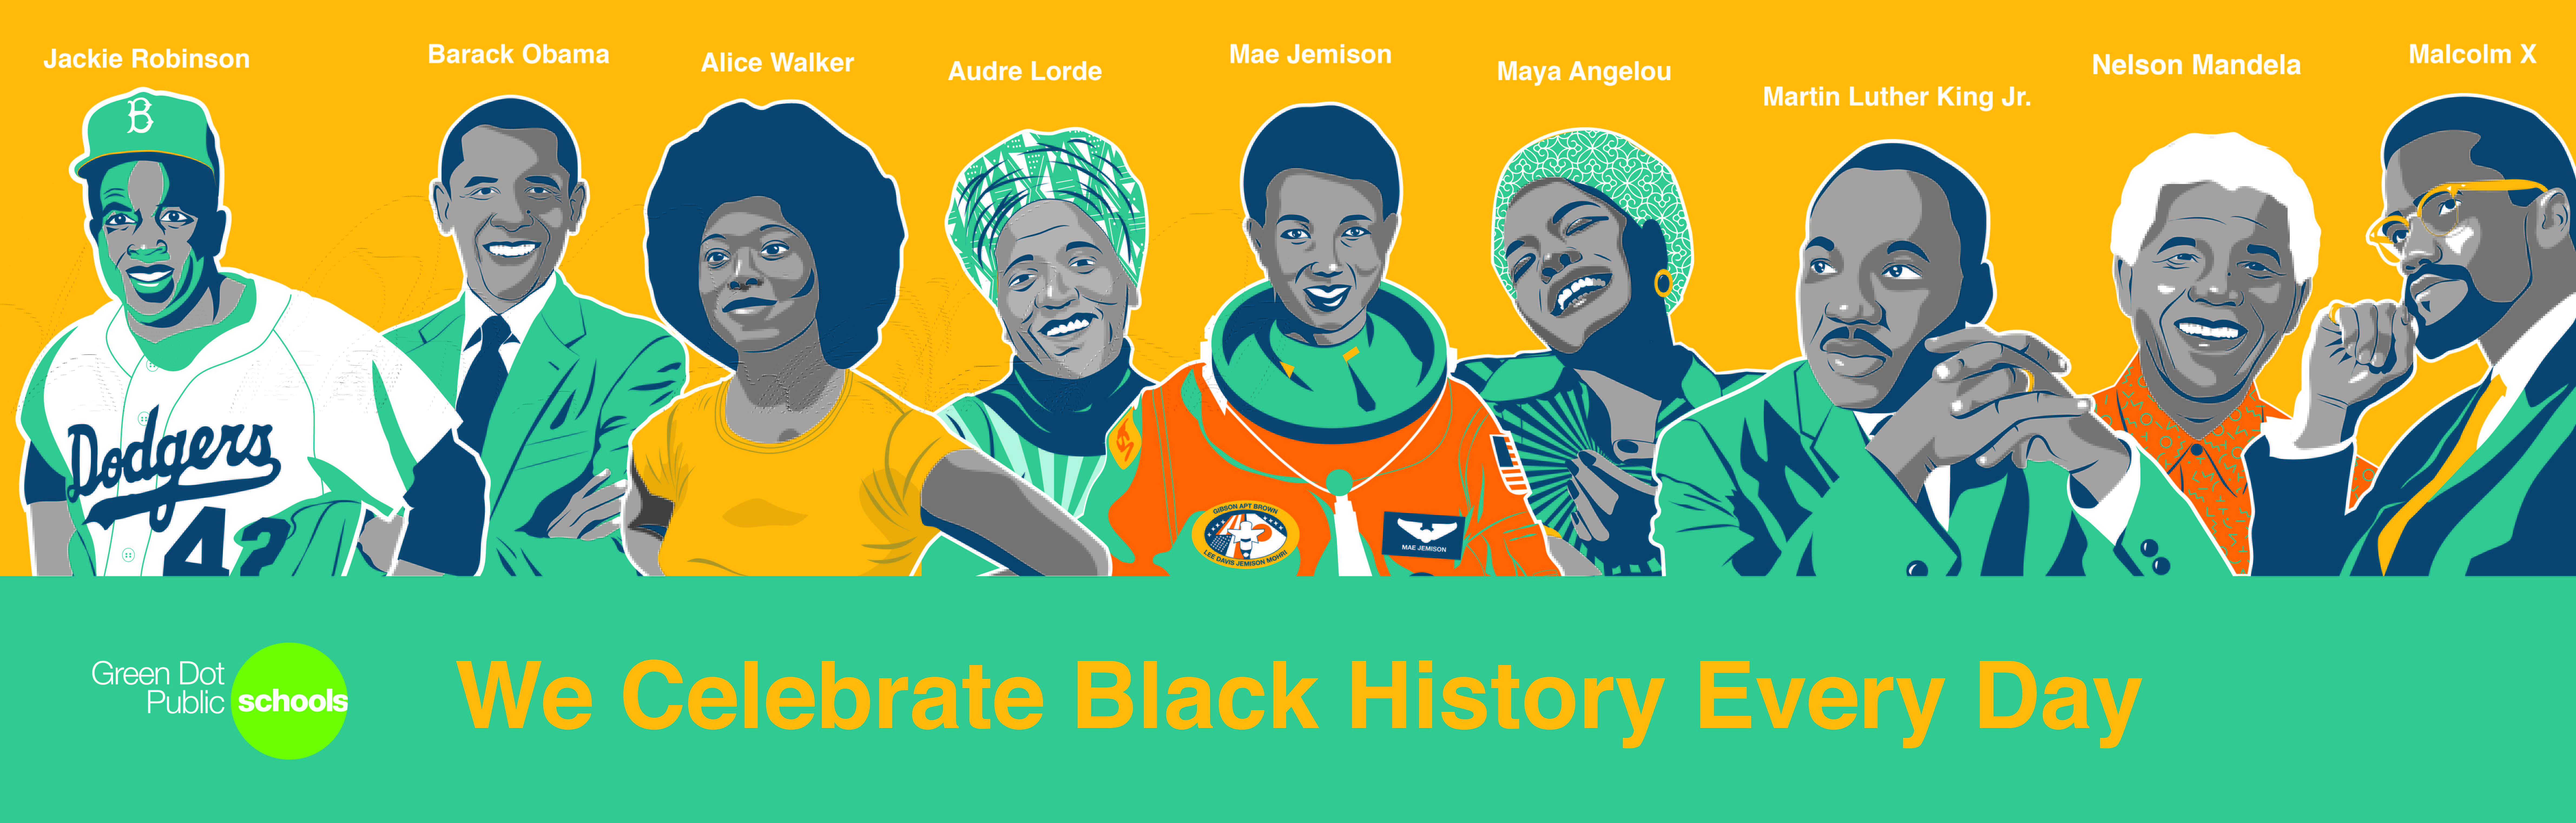 AJR.Black History Month.20180130.R1-01